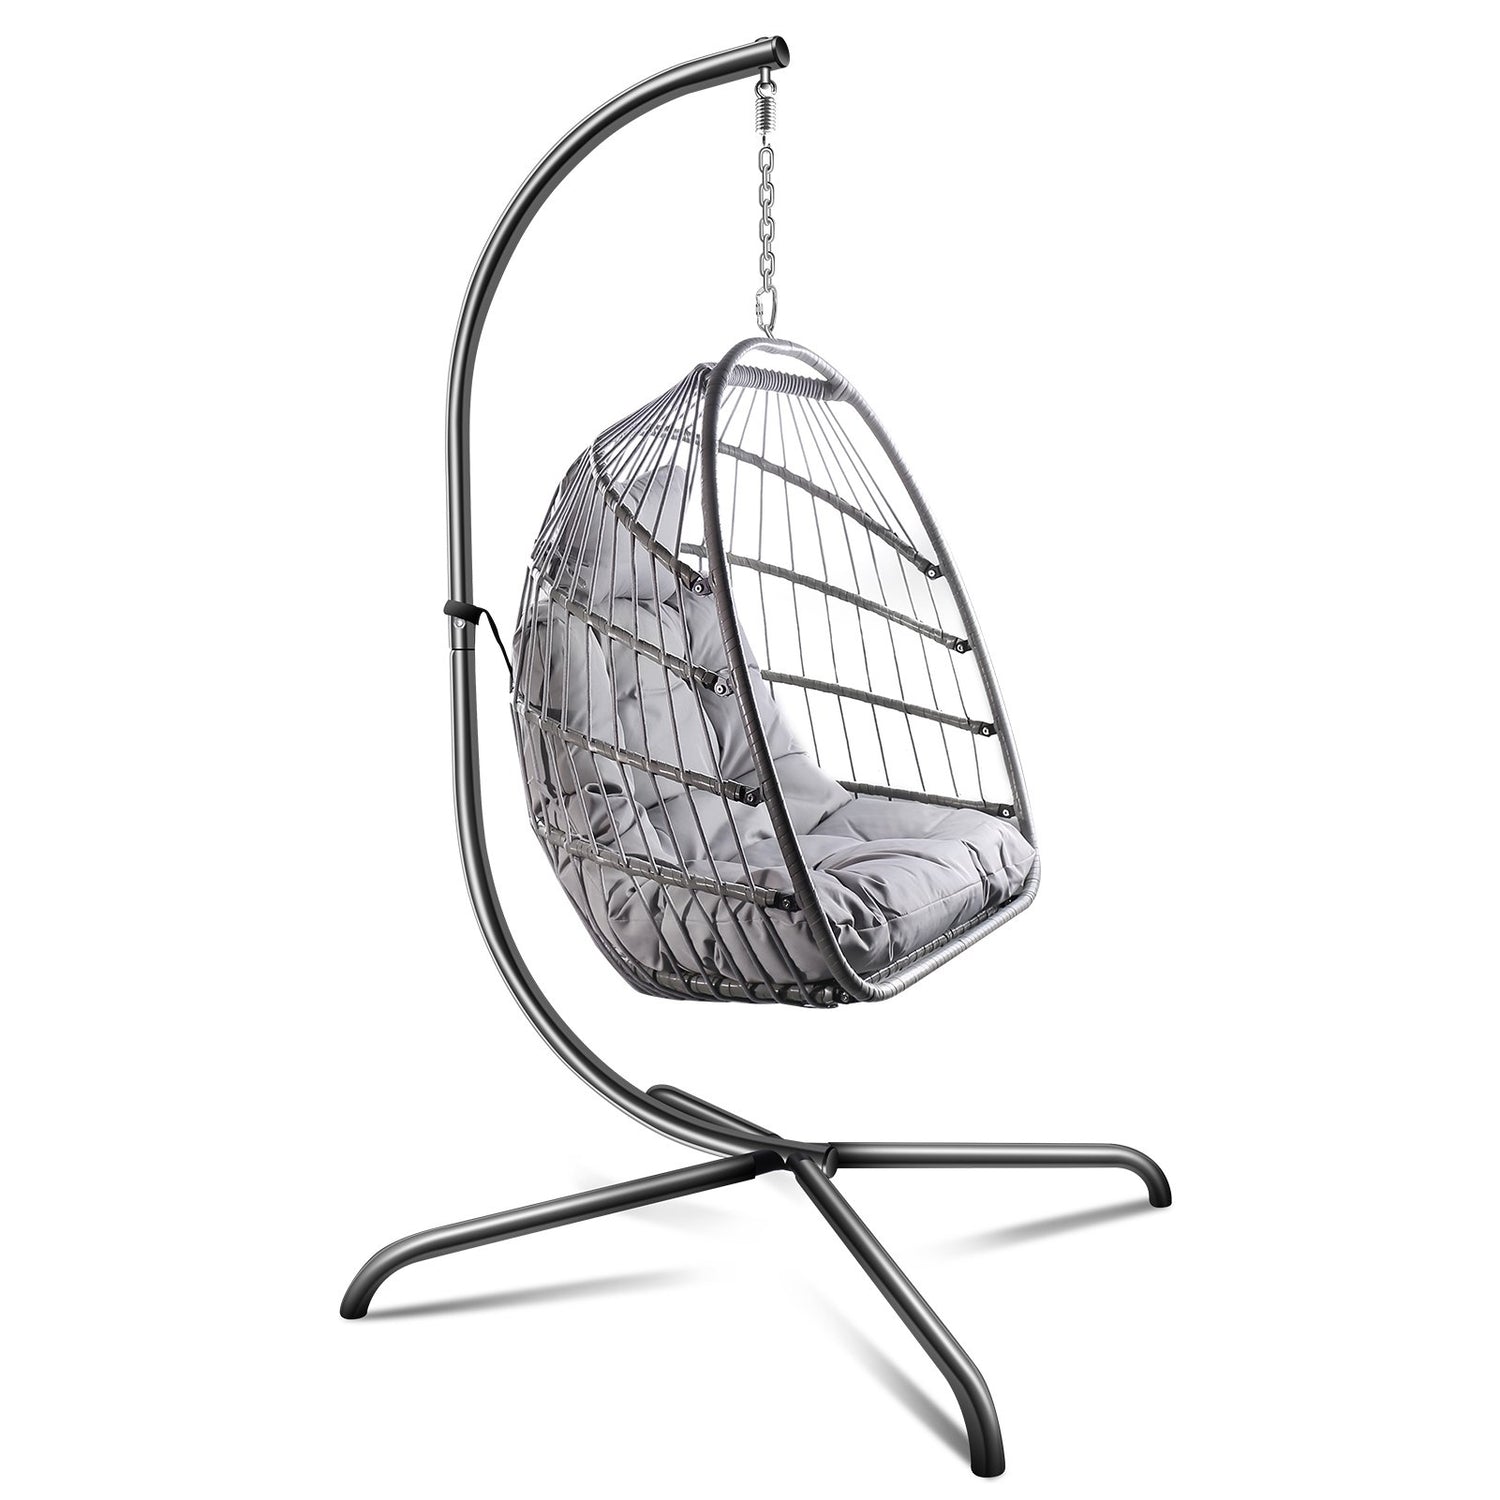 Anrli Patio Wicker Hanging Chair Swing